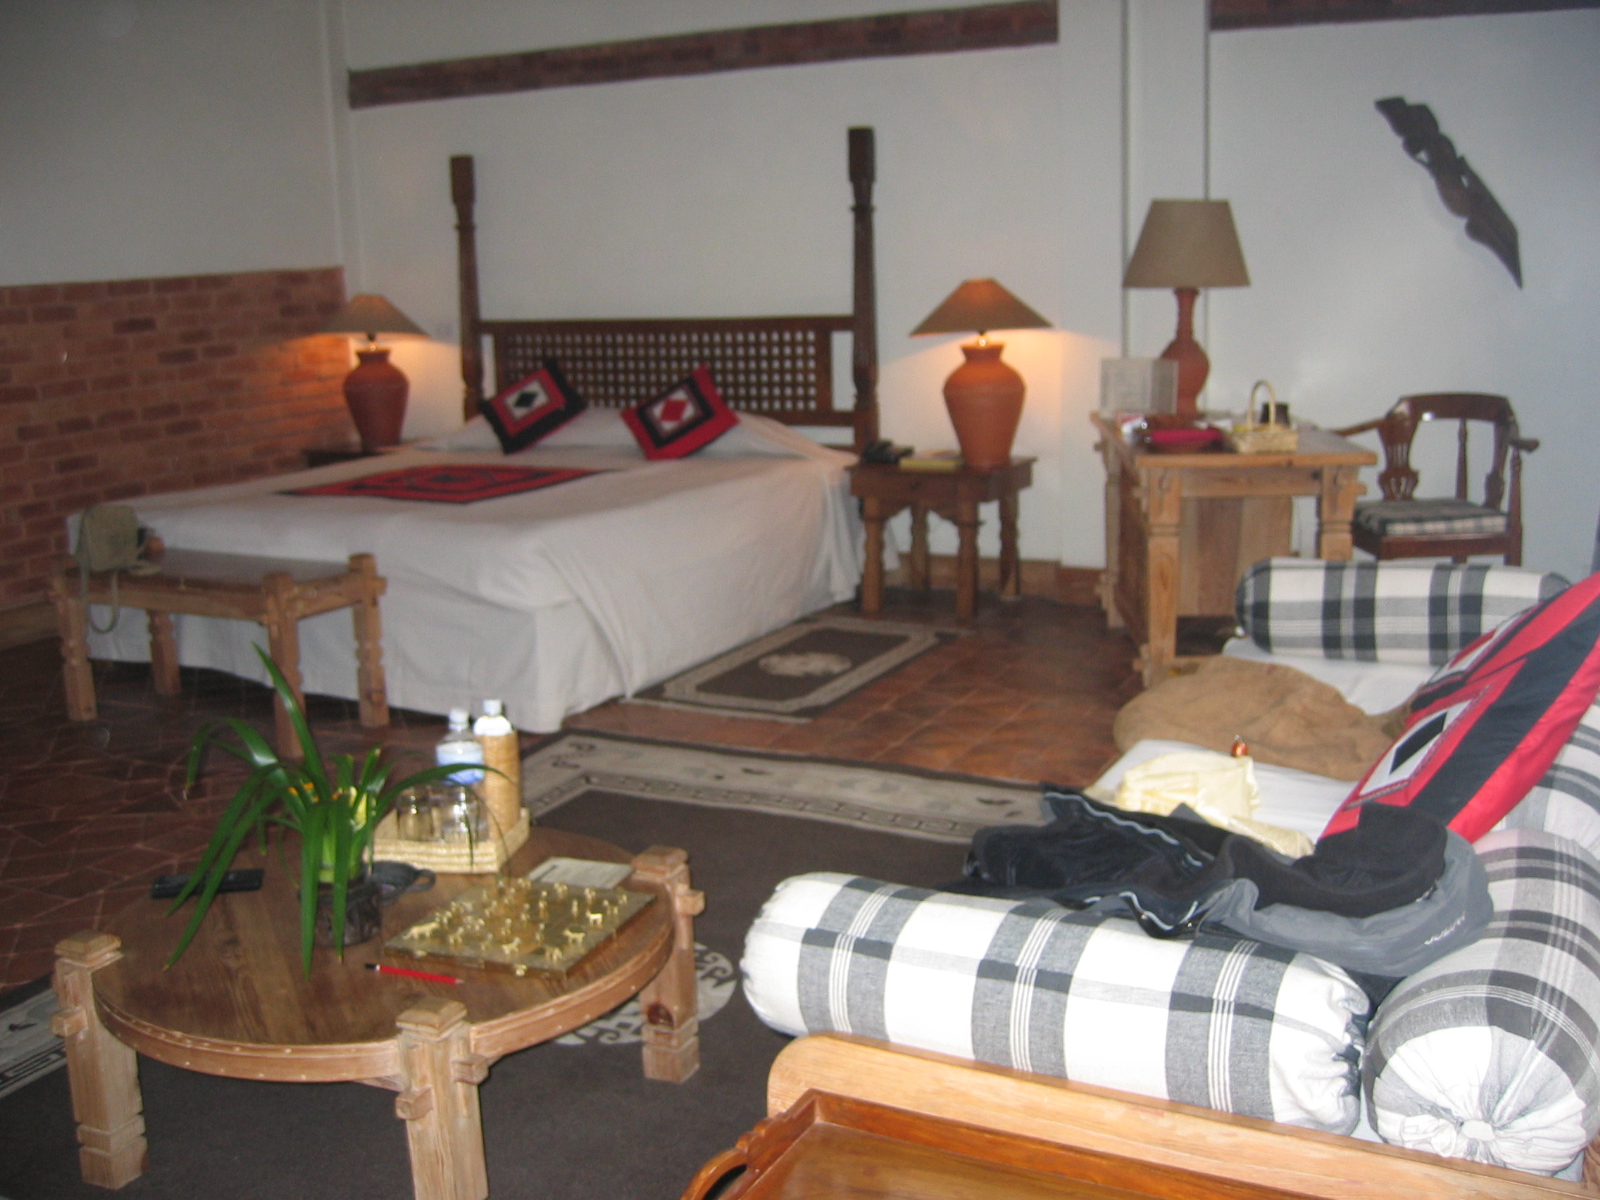 Nepal, 2004. The Dwarika's hotel